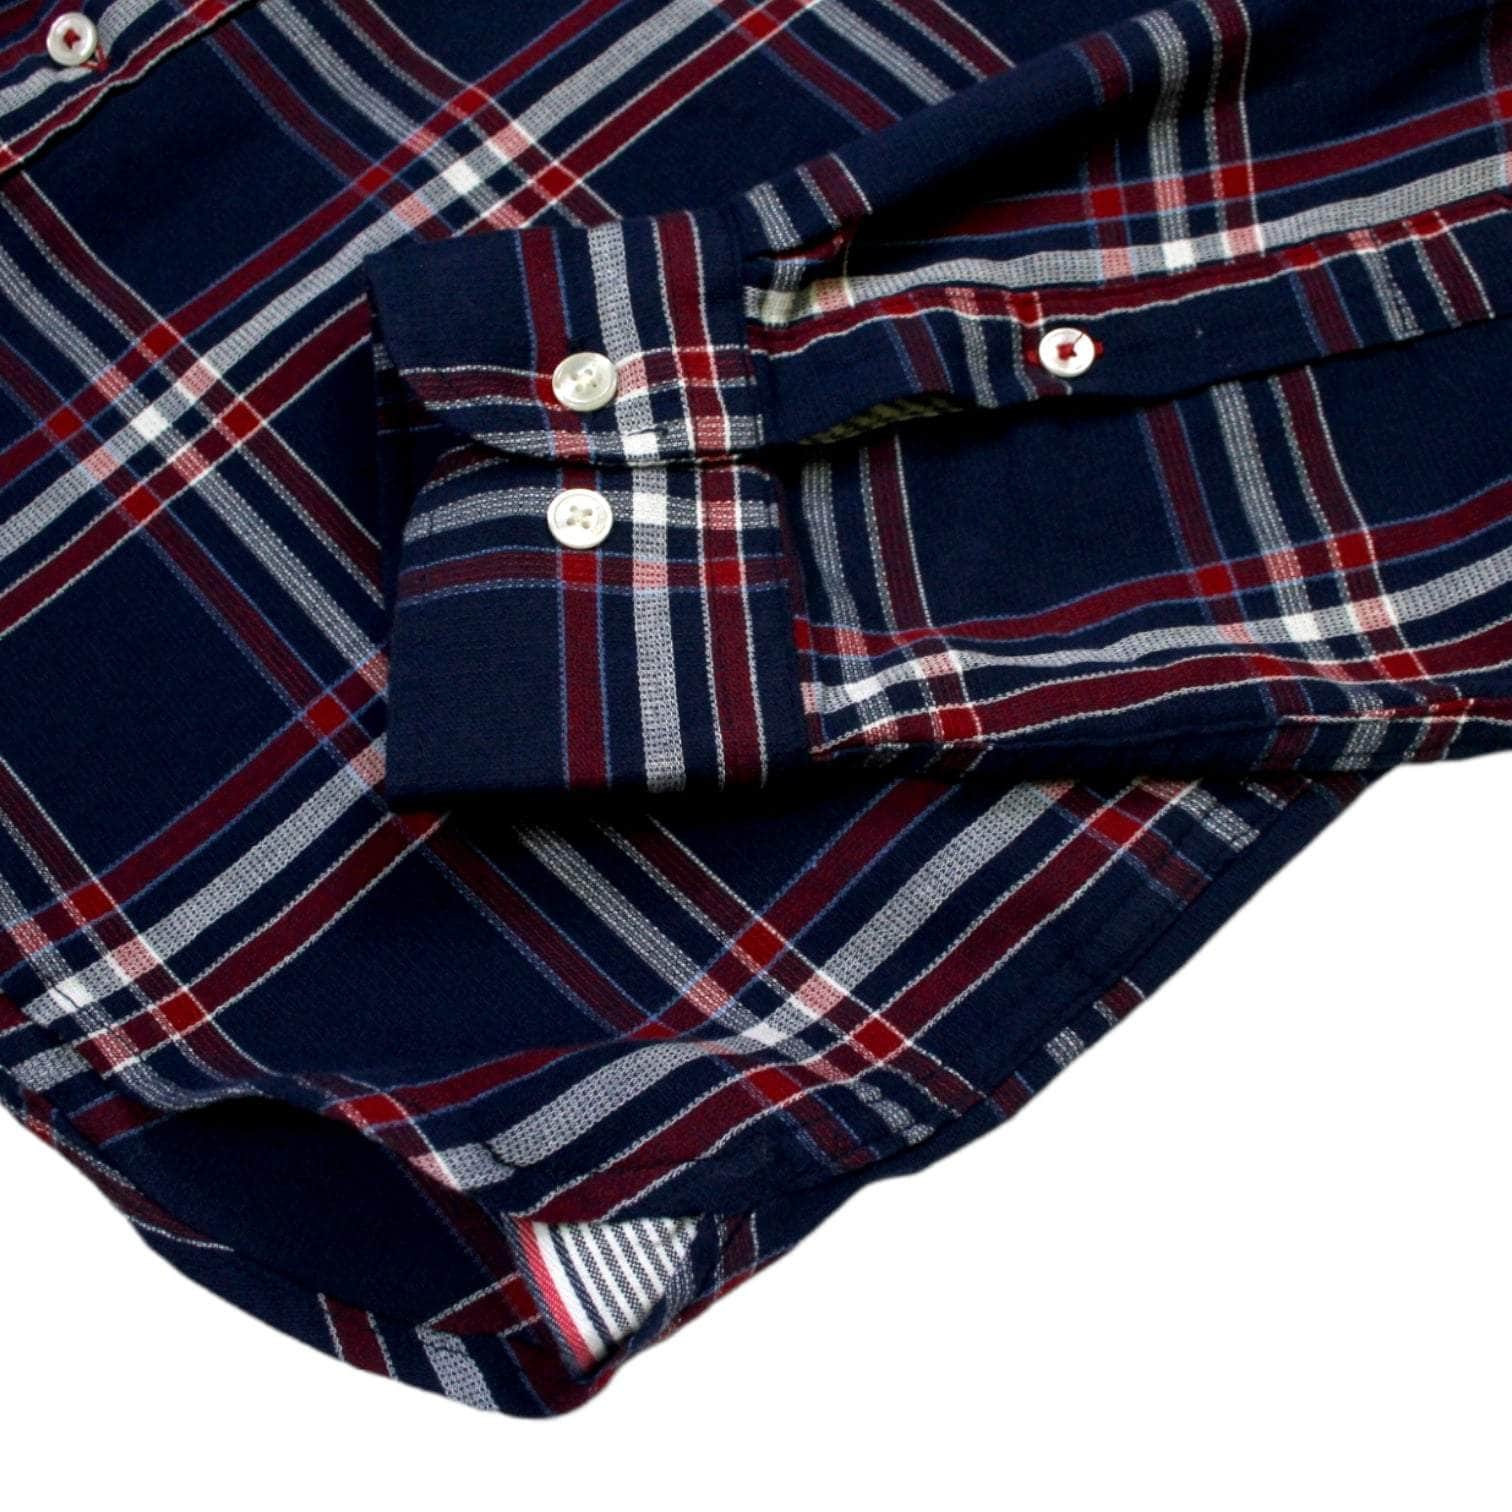 Tommy Hilfiger Navy Plaid Textured Shirt